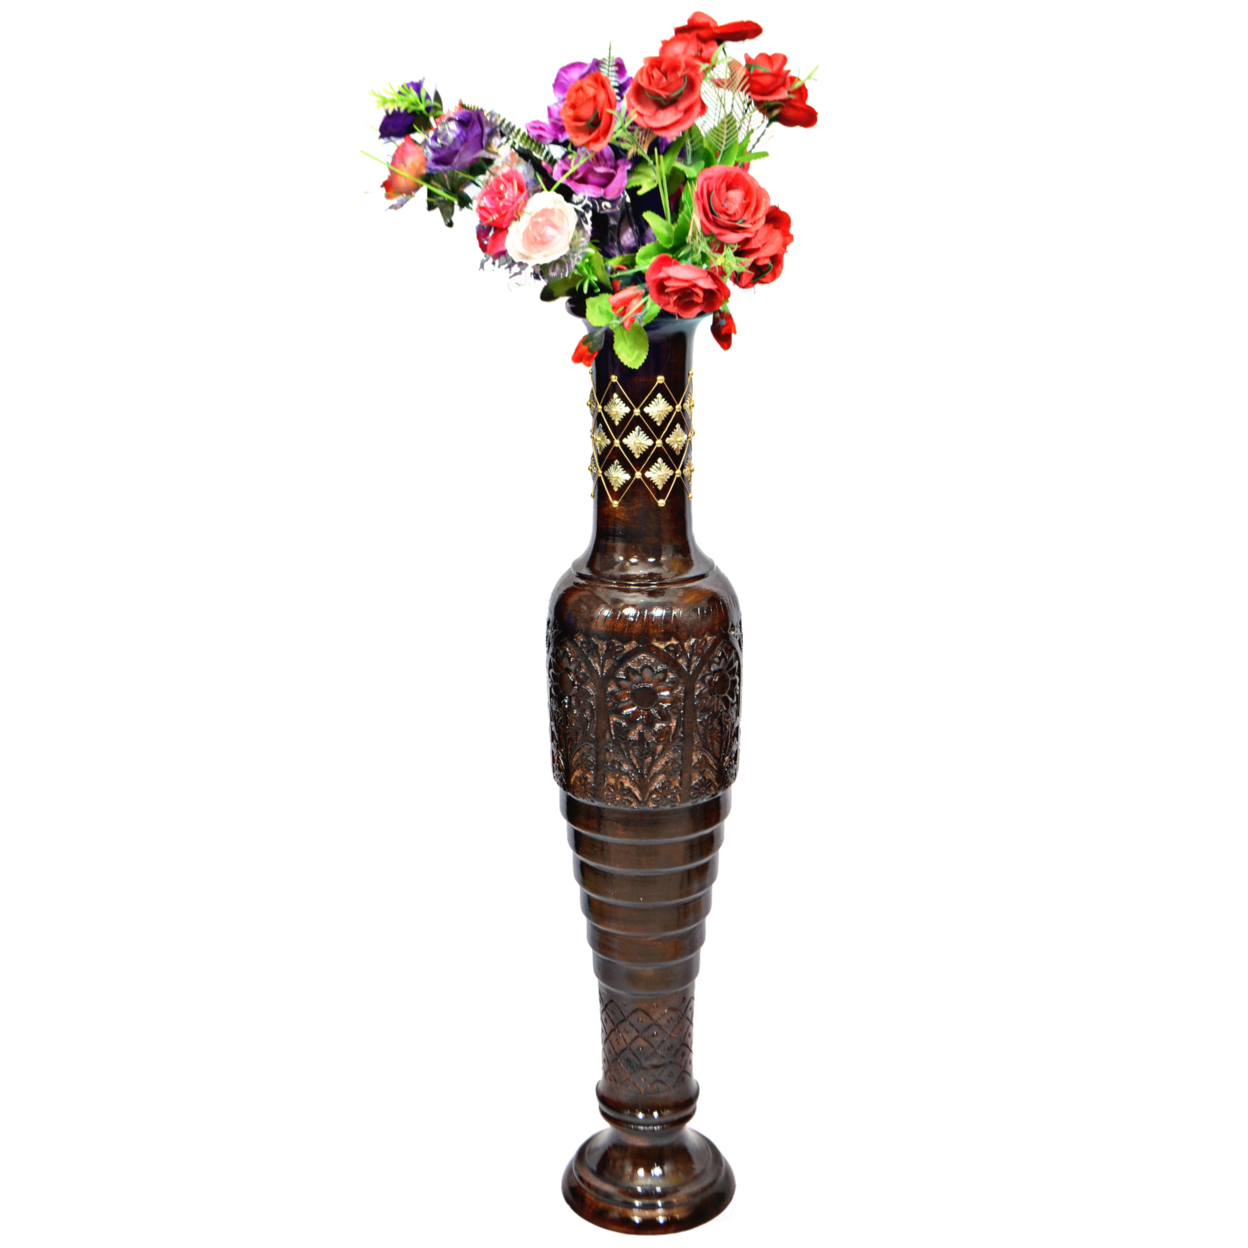 Antique Decorative Hand Curved Brown Mango Wood Floor Flower Vase With Unique Textured Pattern, 37 Inch